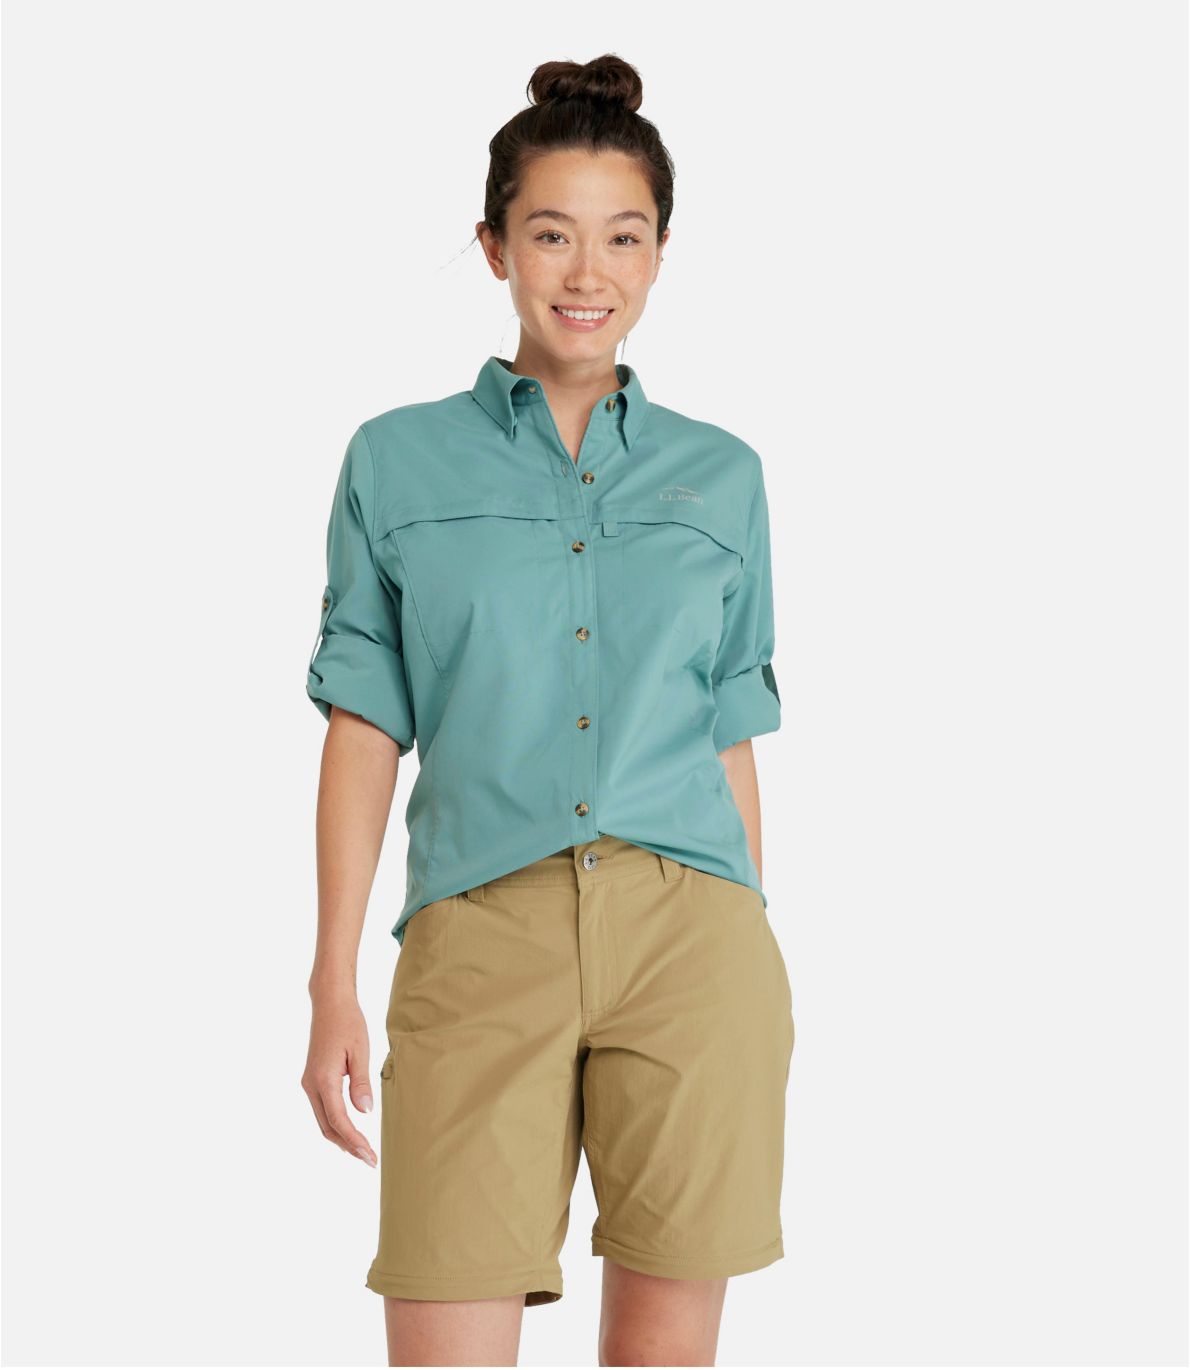 Women's Tropicwear Shirt, Long-Sleeve